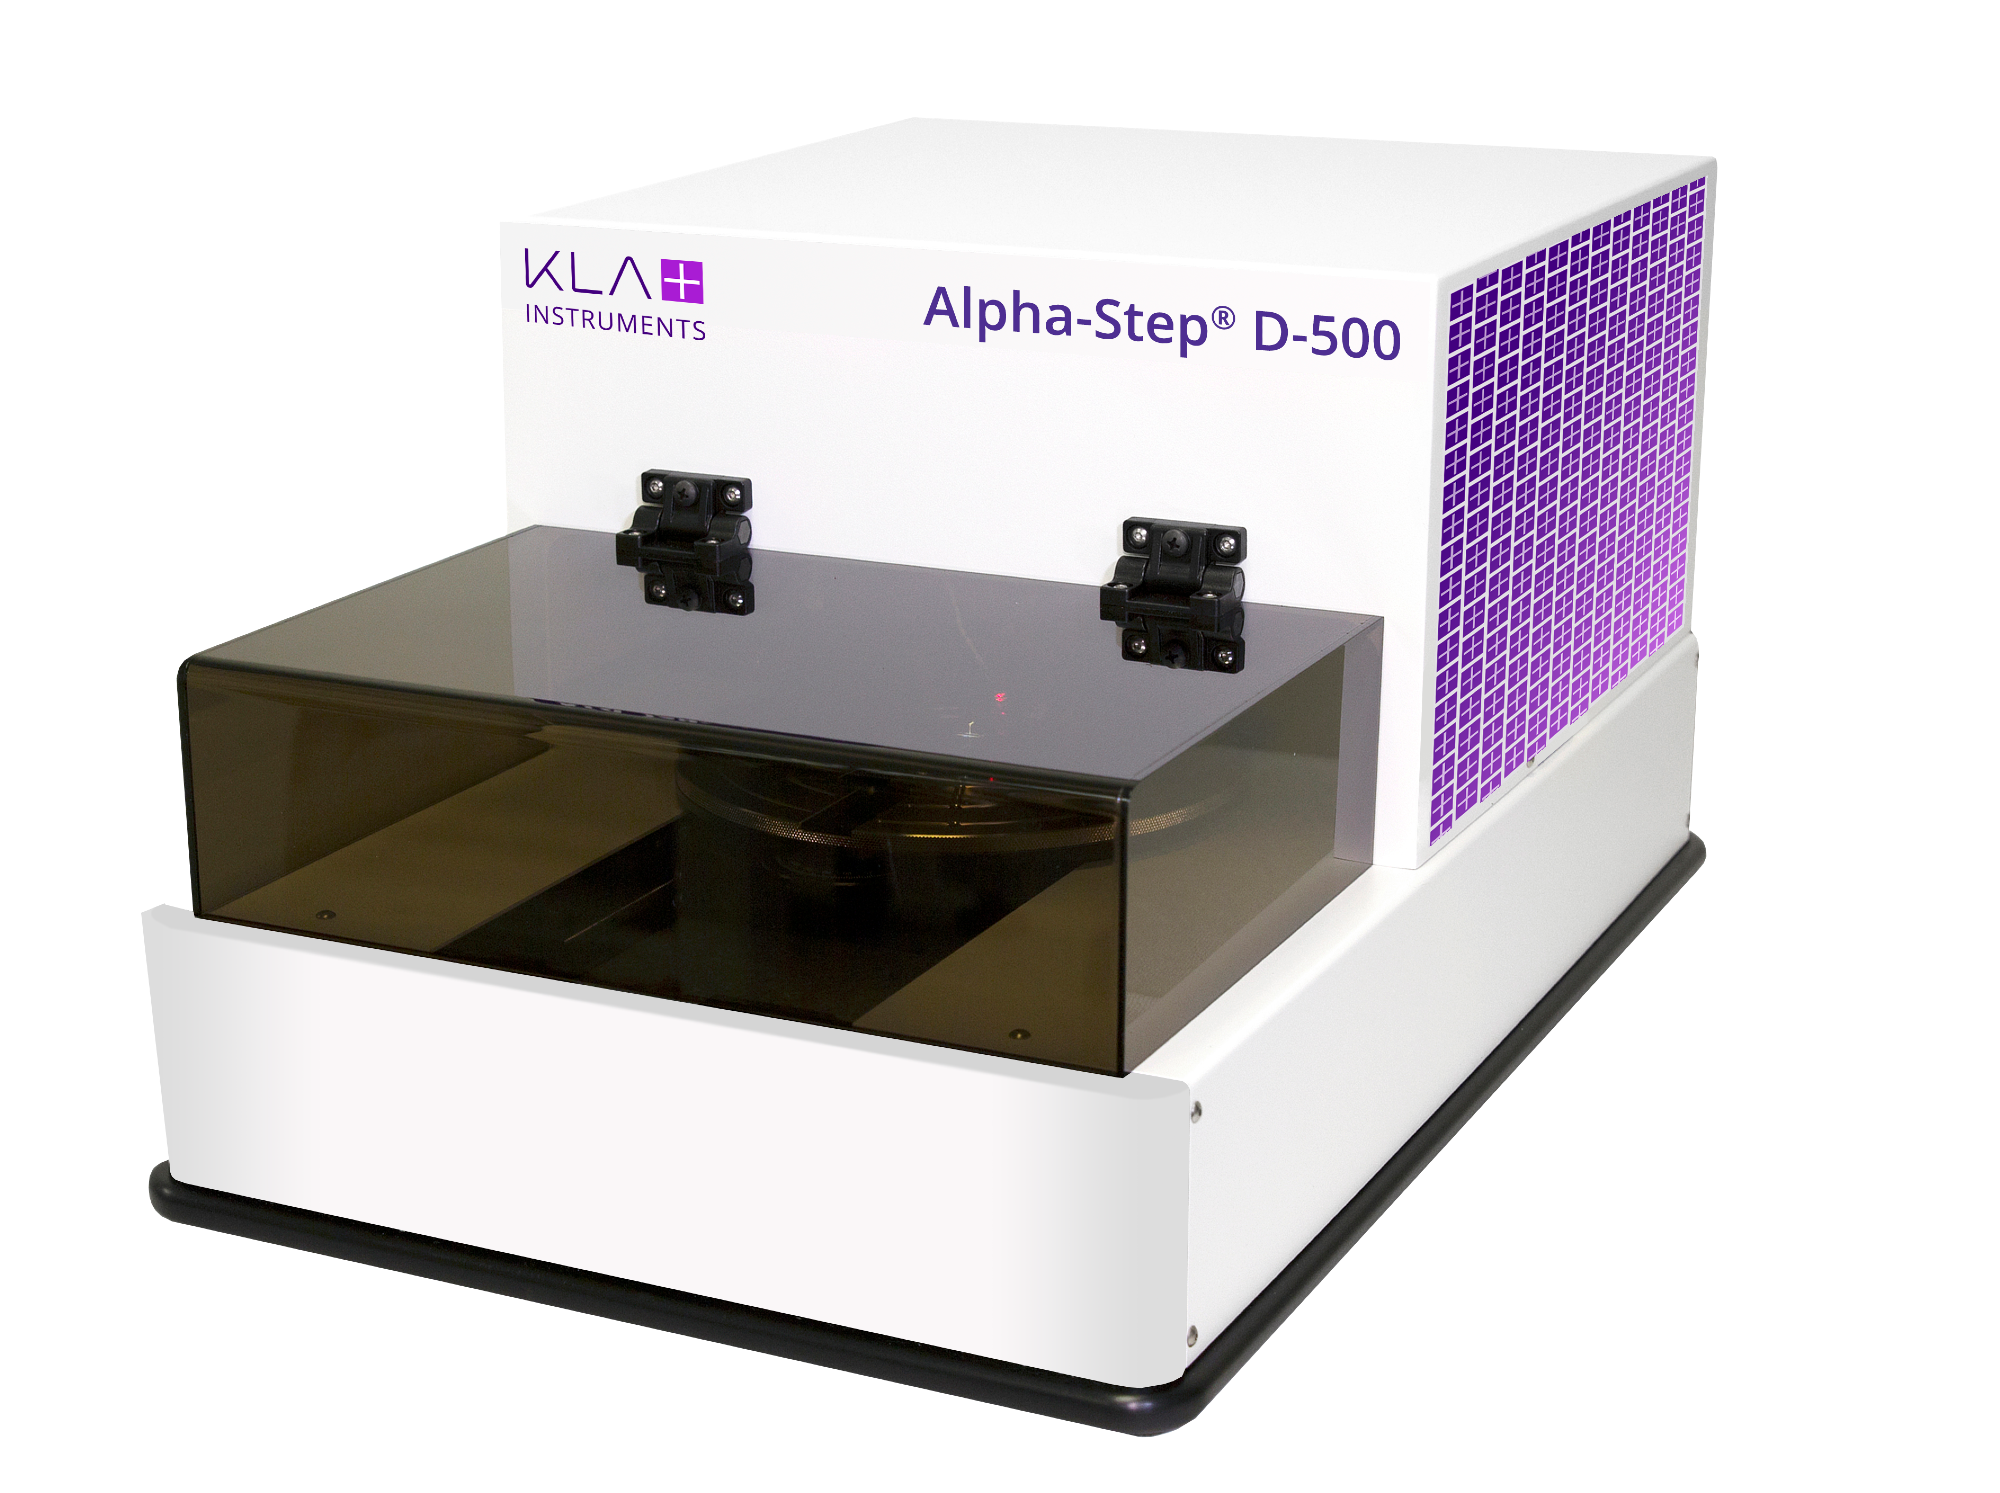 The Alpha-Step® D-500 Stylus Profiler from KLA Instruments™